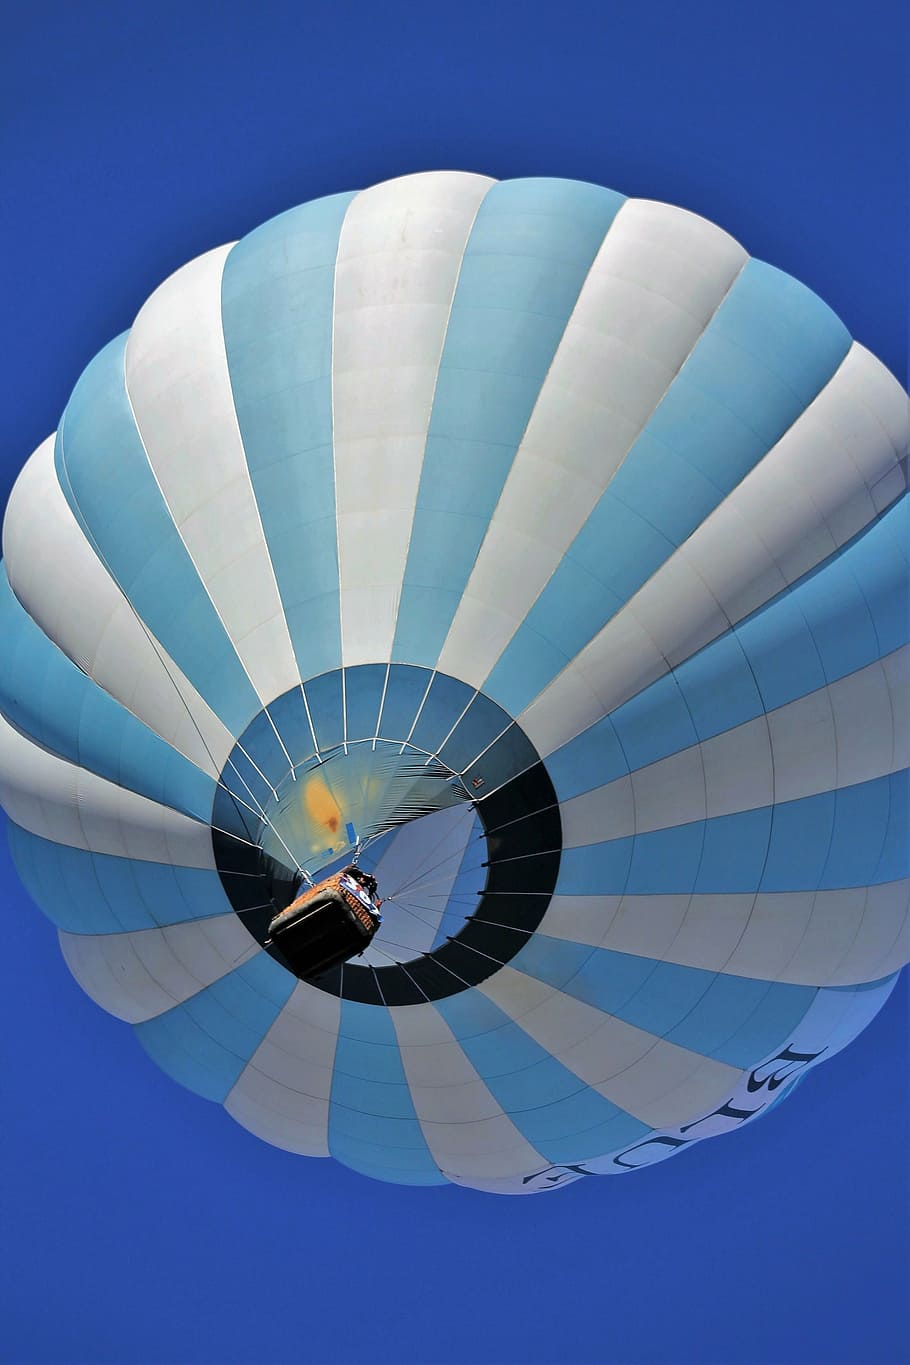 albuquerque balloon fiesta, balloons, sky, colorful, blue, pattern, flight, travel, fun, recreation